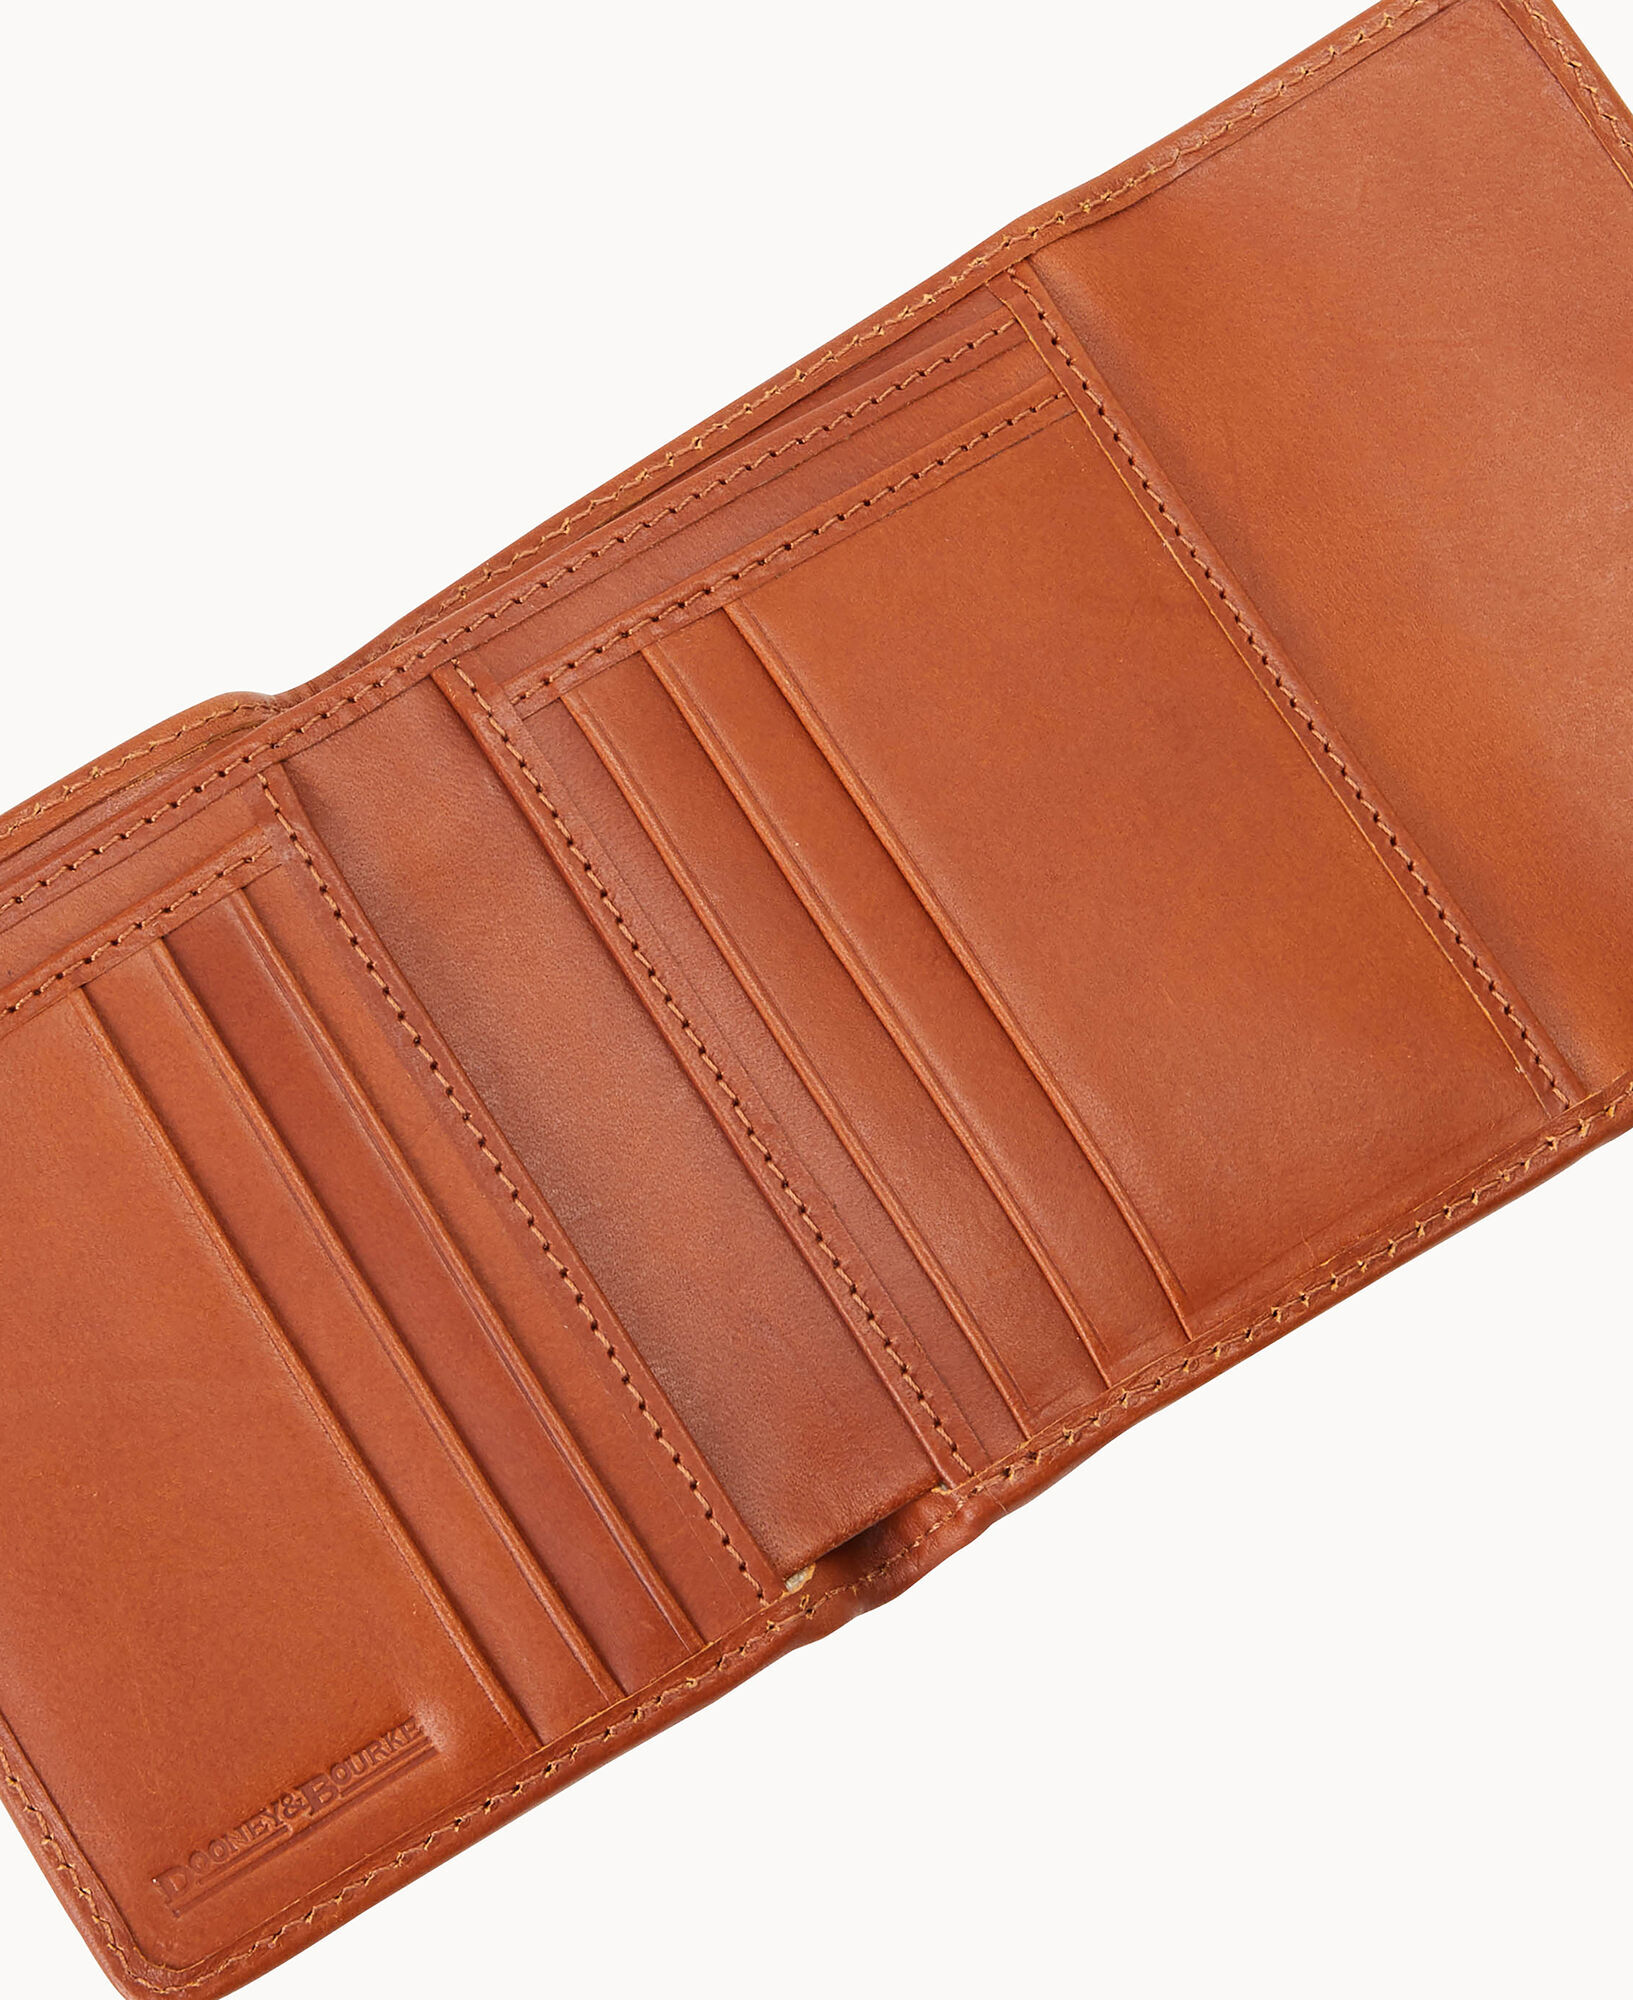 Monogramme Logo Leather Flap Wallet